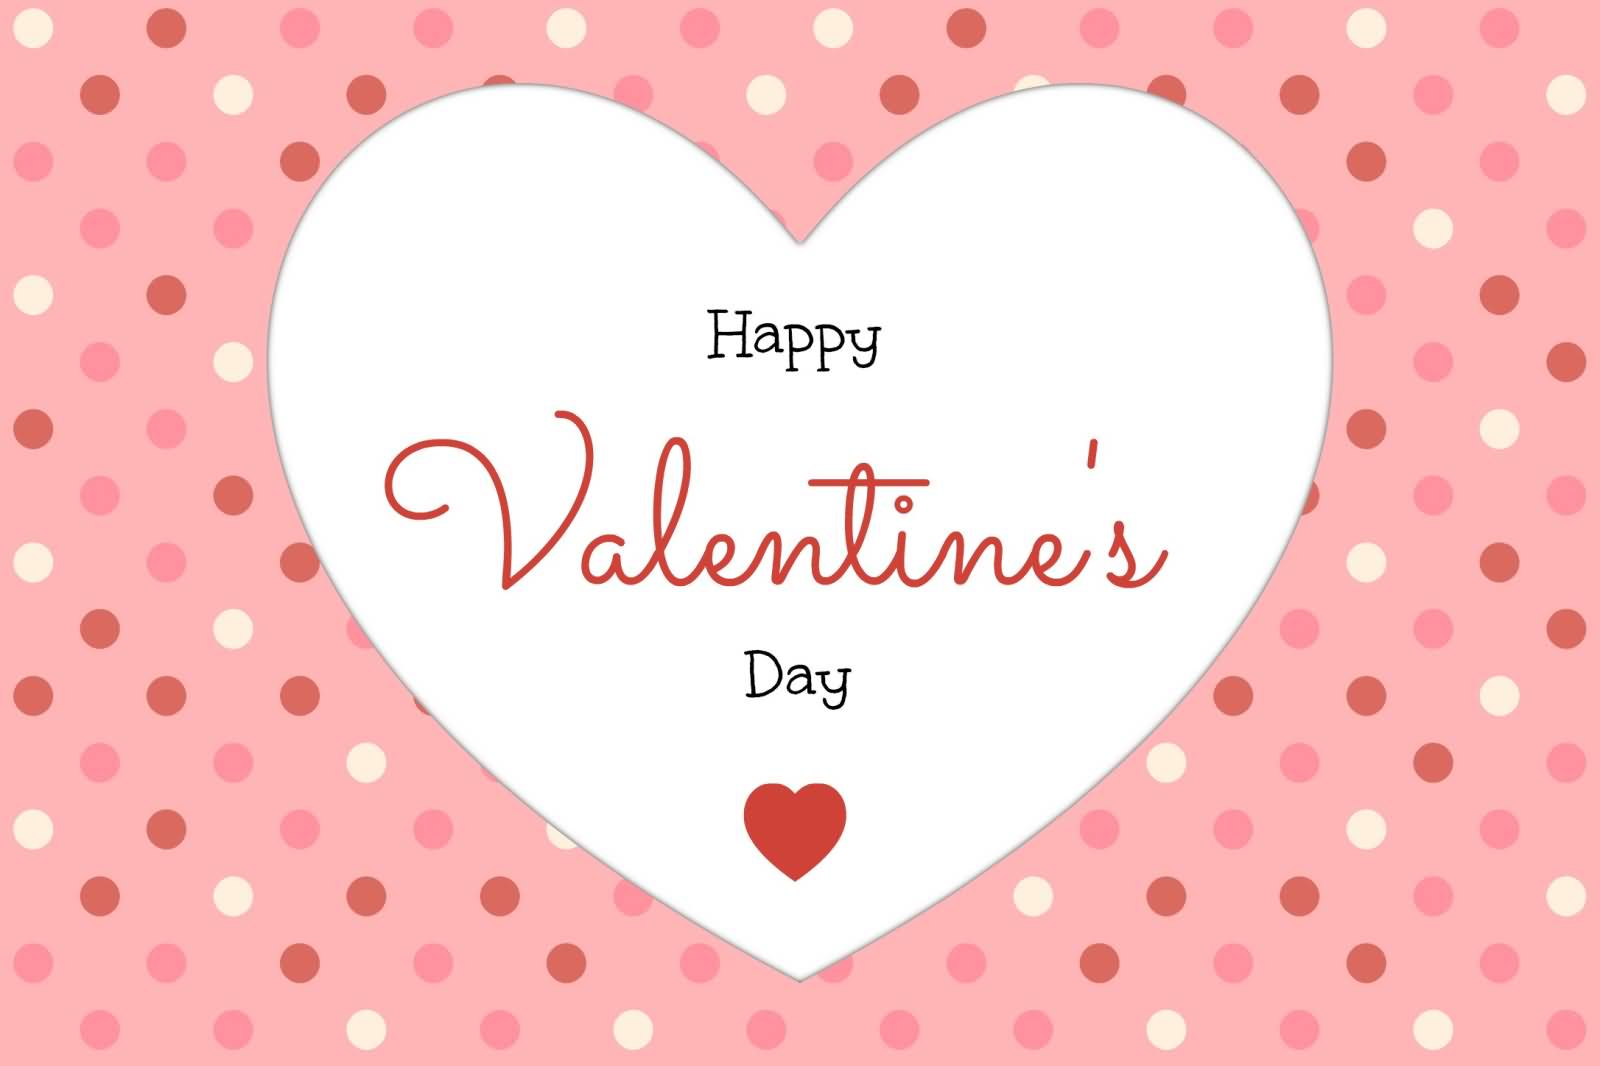 Happy Valentine’s Day Heart Picture